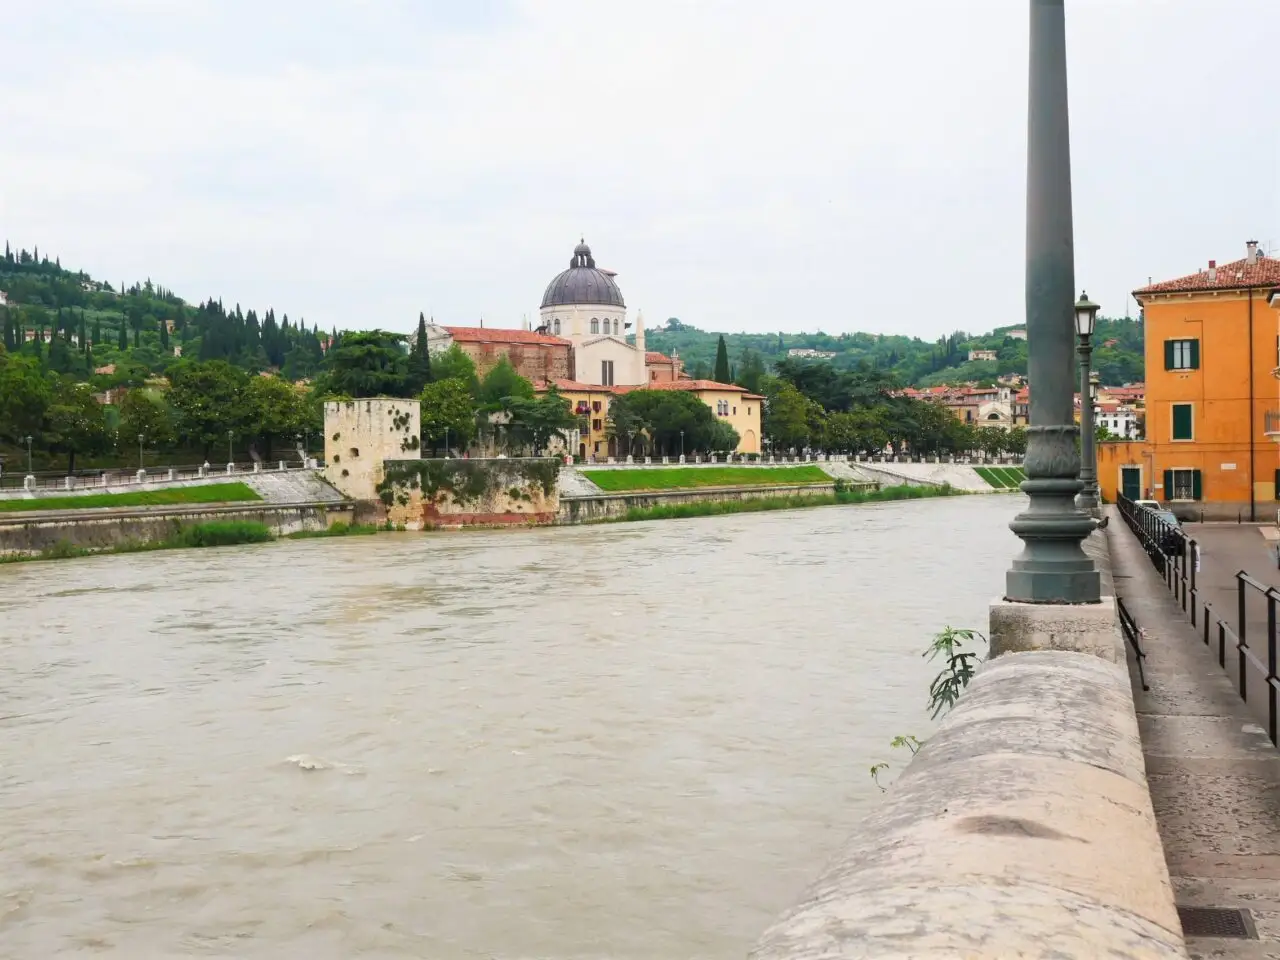 Bank of the River Adige in Verona